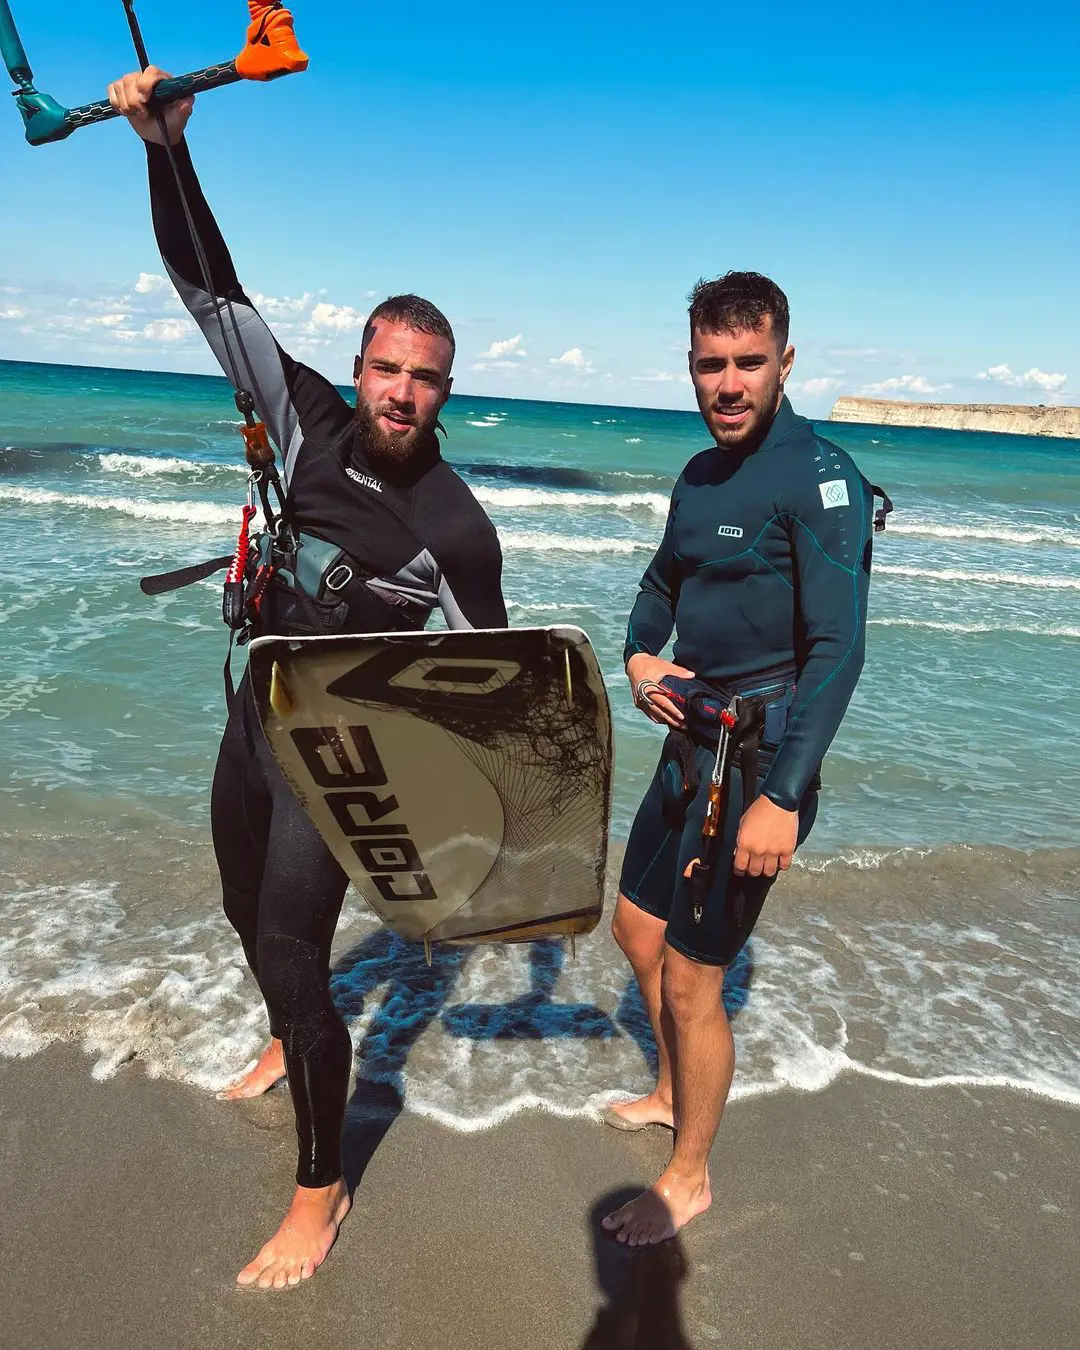 Valeri Grigorov was seen surfing with a friend in 2022